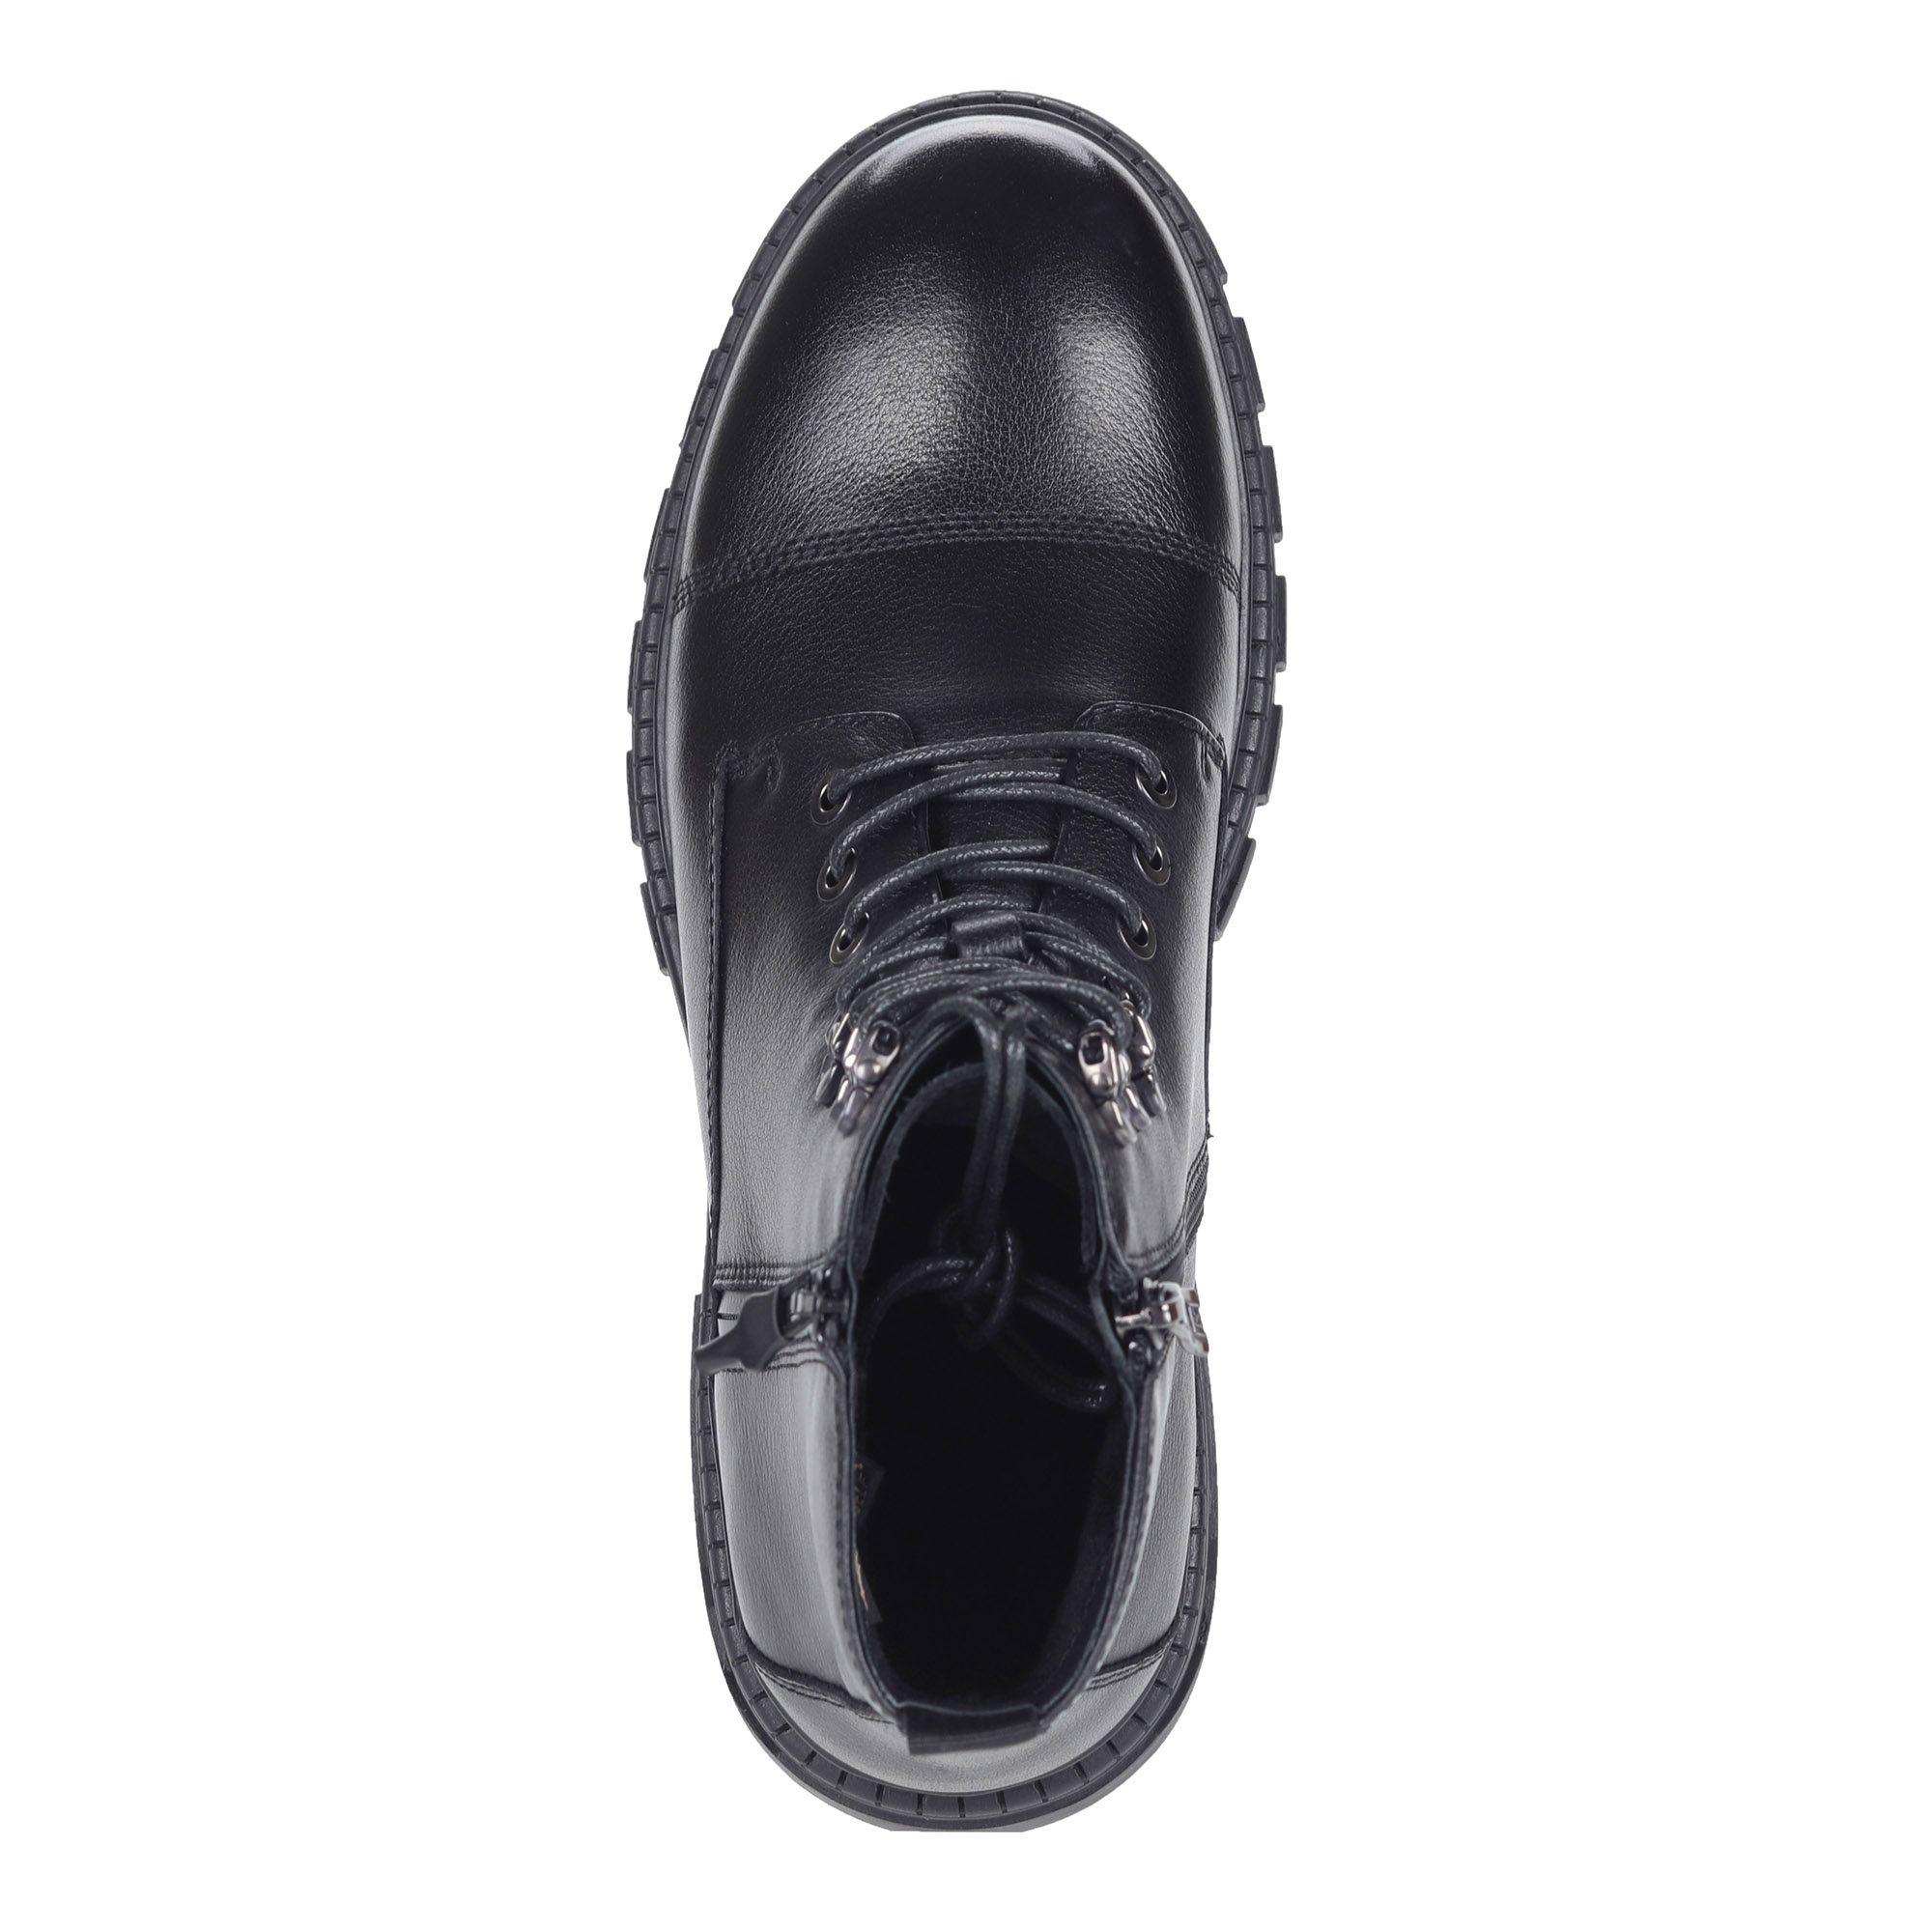 Черные ботинки из кожи на рифленой подошве от Respect-shoes